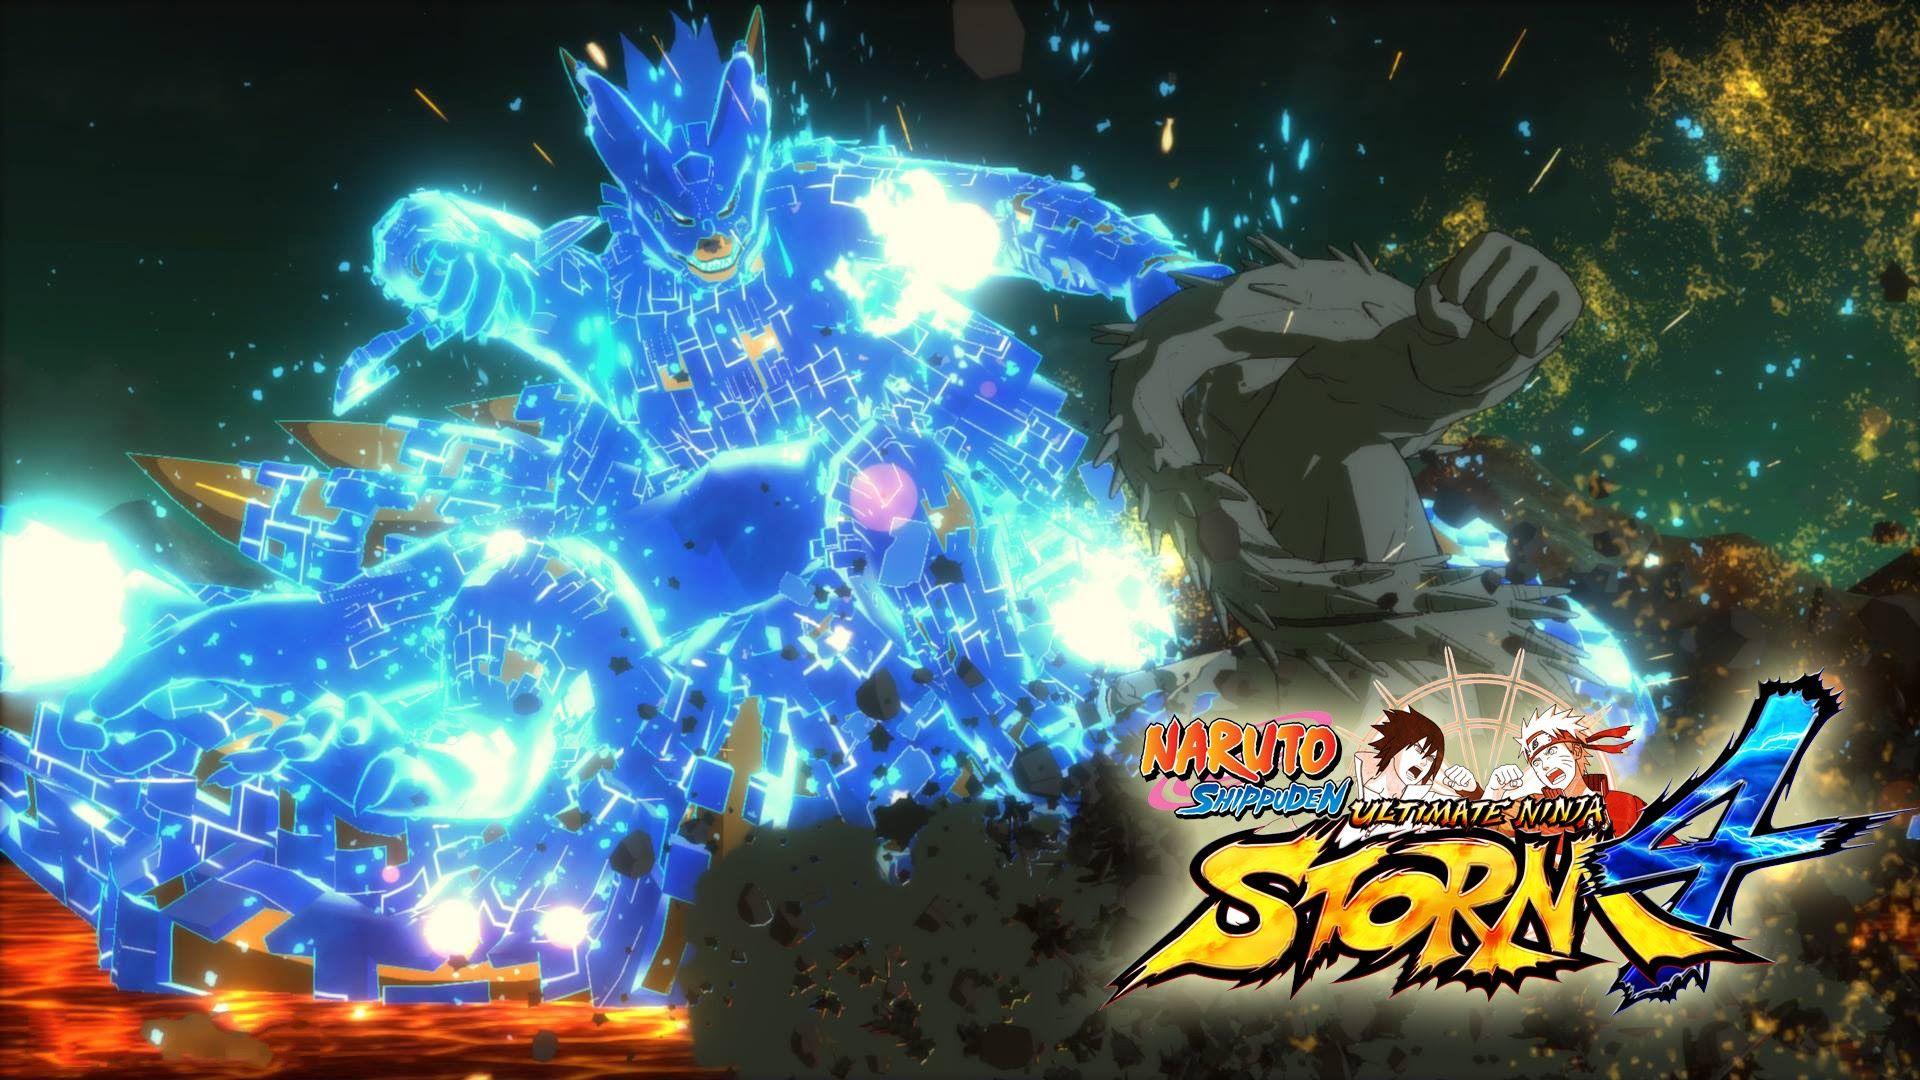 Naruto Storm 4 Gameplay vs Madara Complete Demo Boss